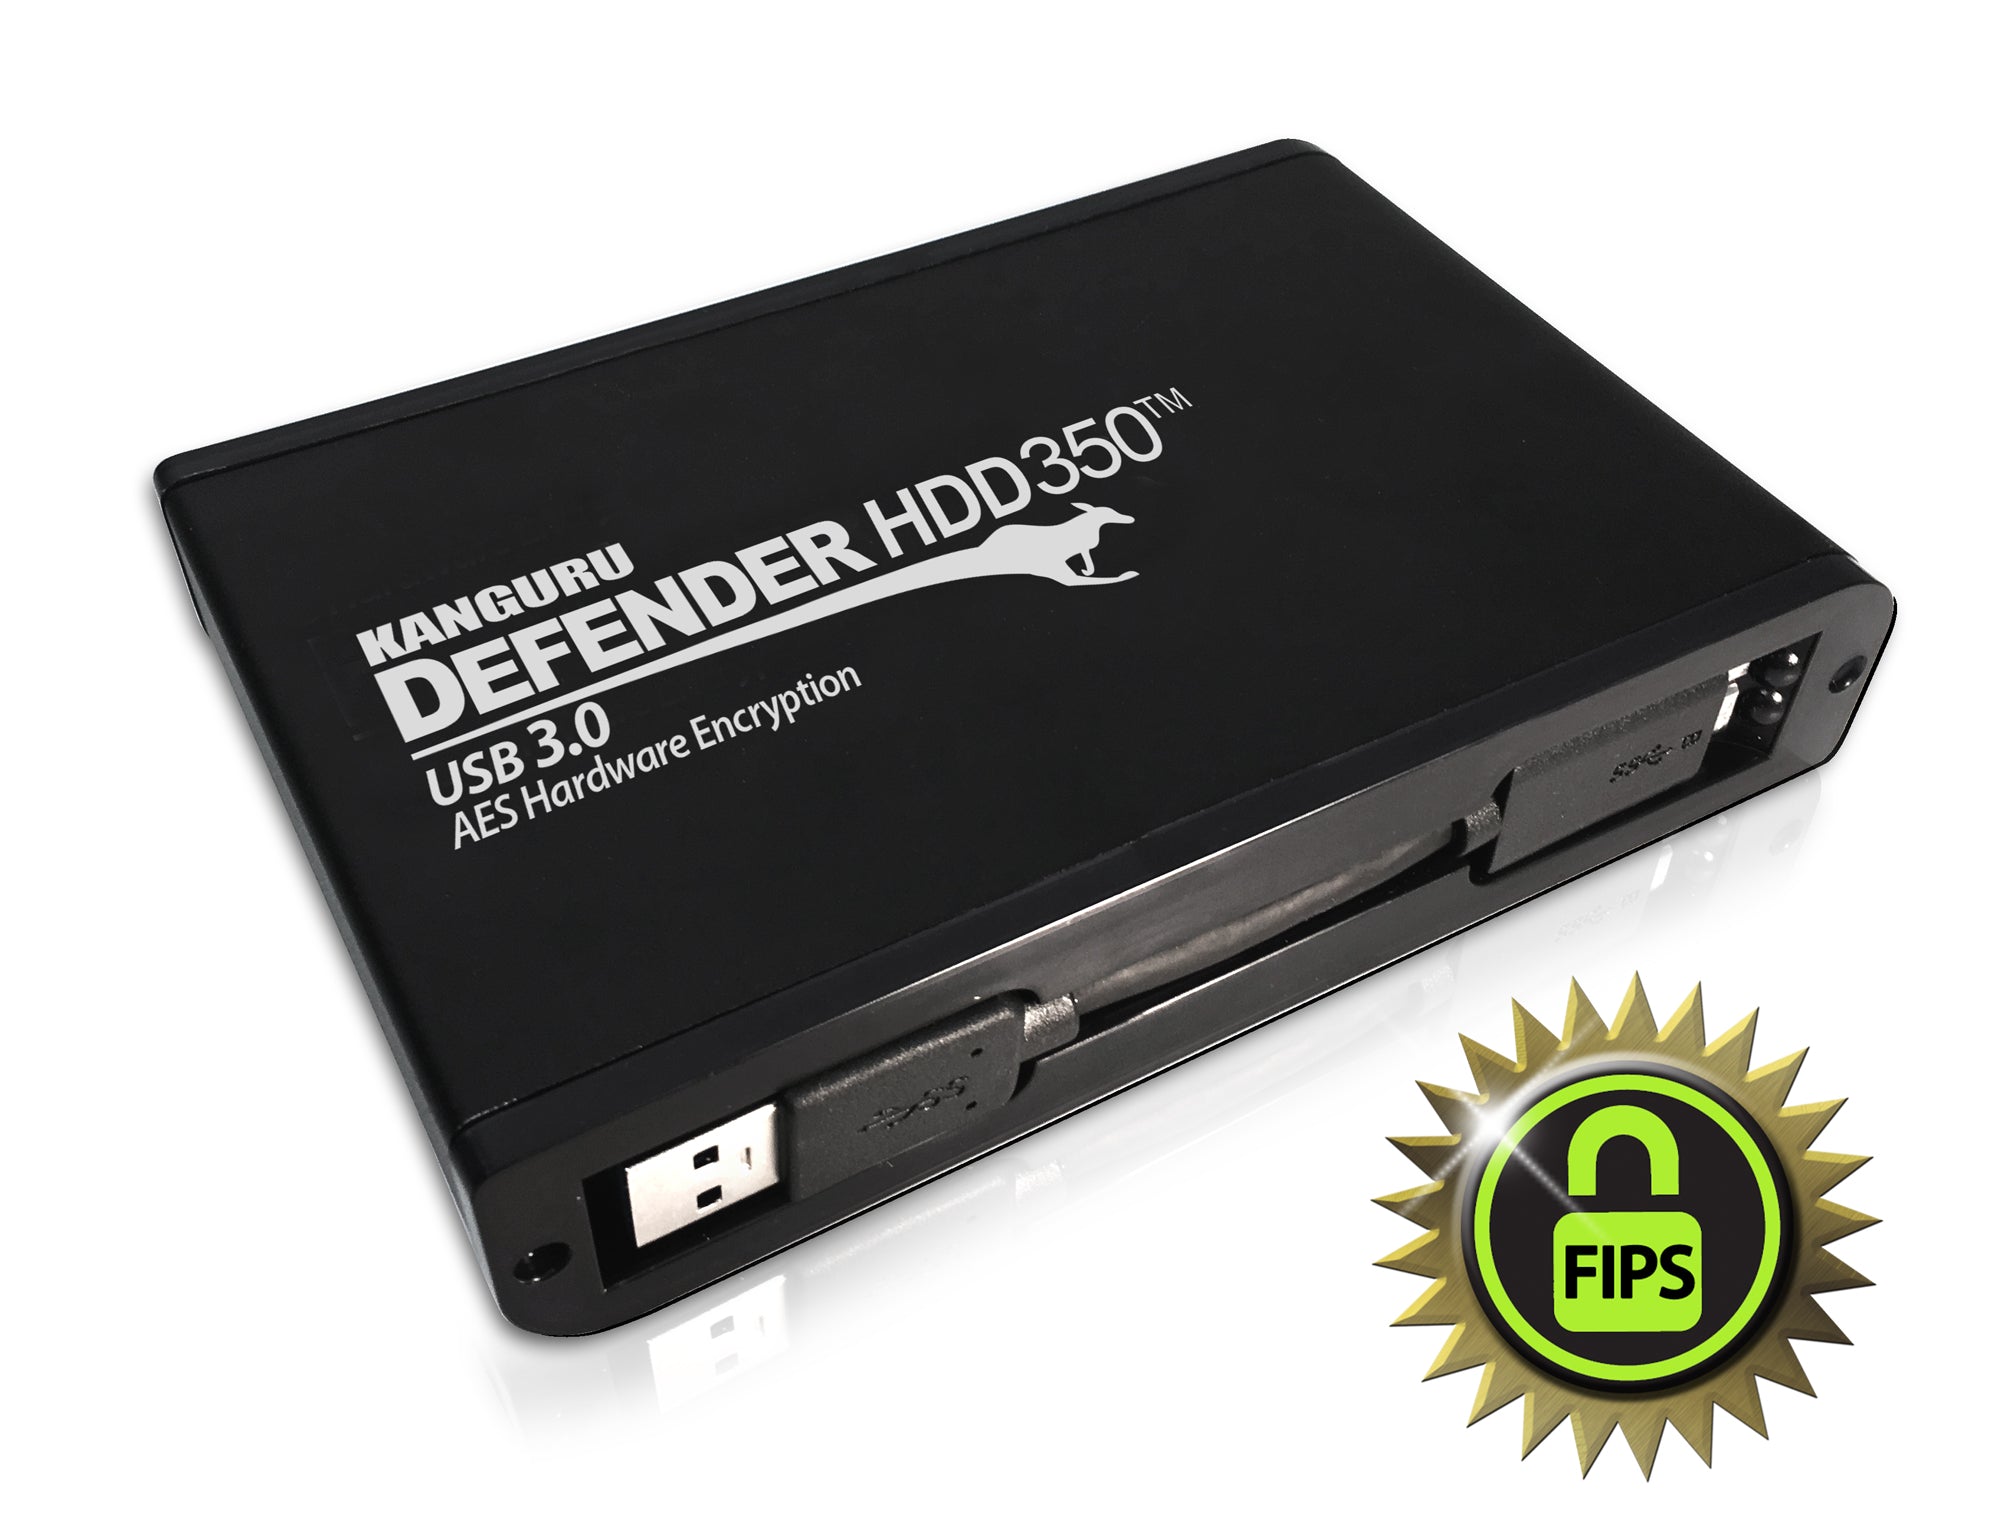 Kanguru Defender HDD350 hardware encrypted, FIPS 140-2 Certified, secure hard drive